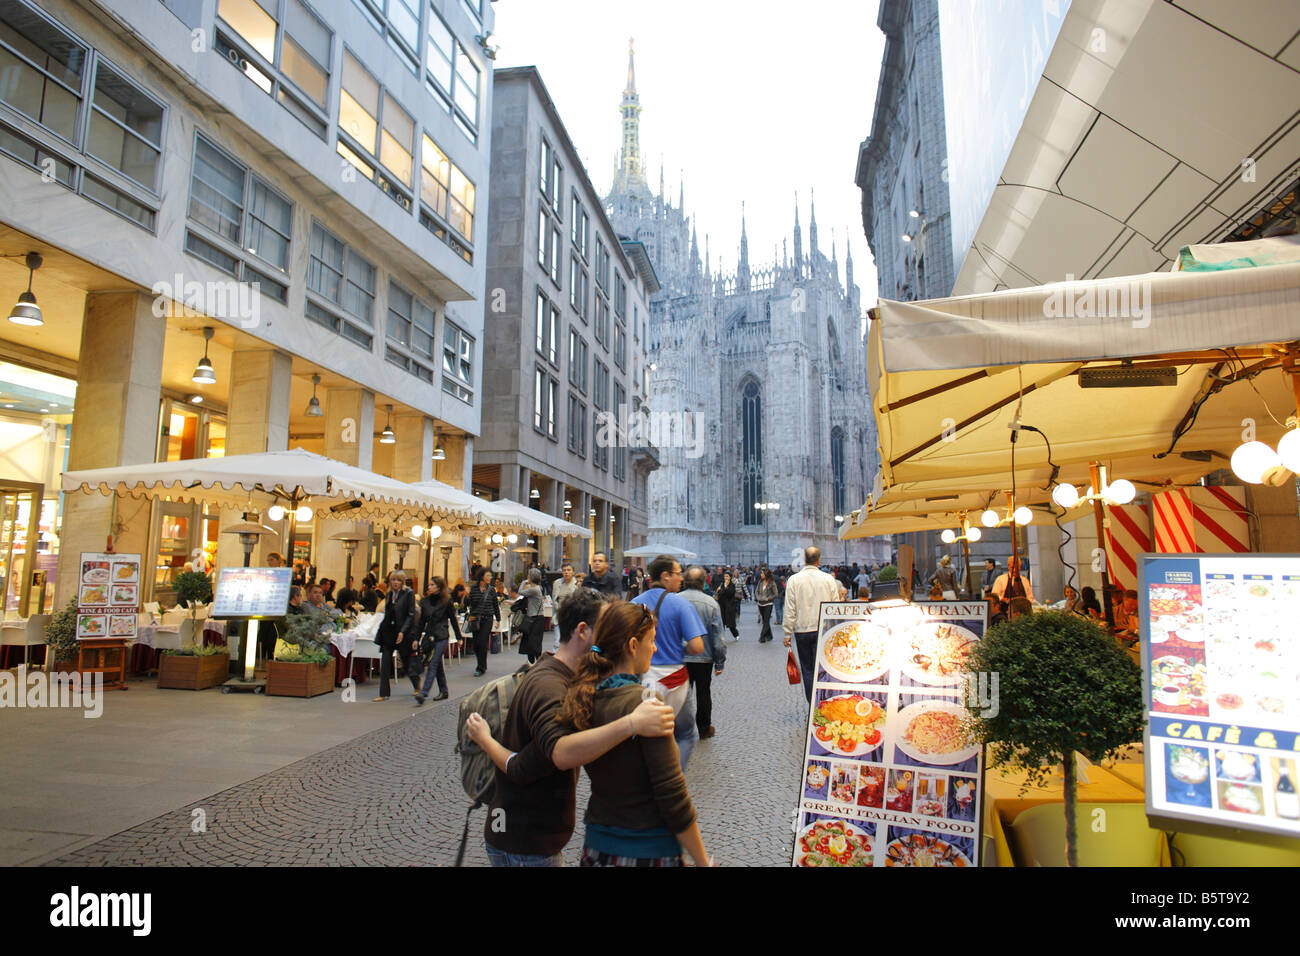 Restaurant outdoors near Duomo Square, Milan, Italy Stock Photo